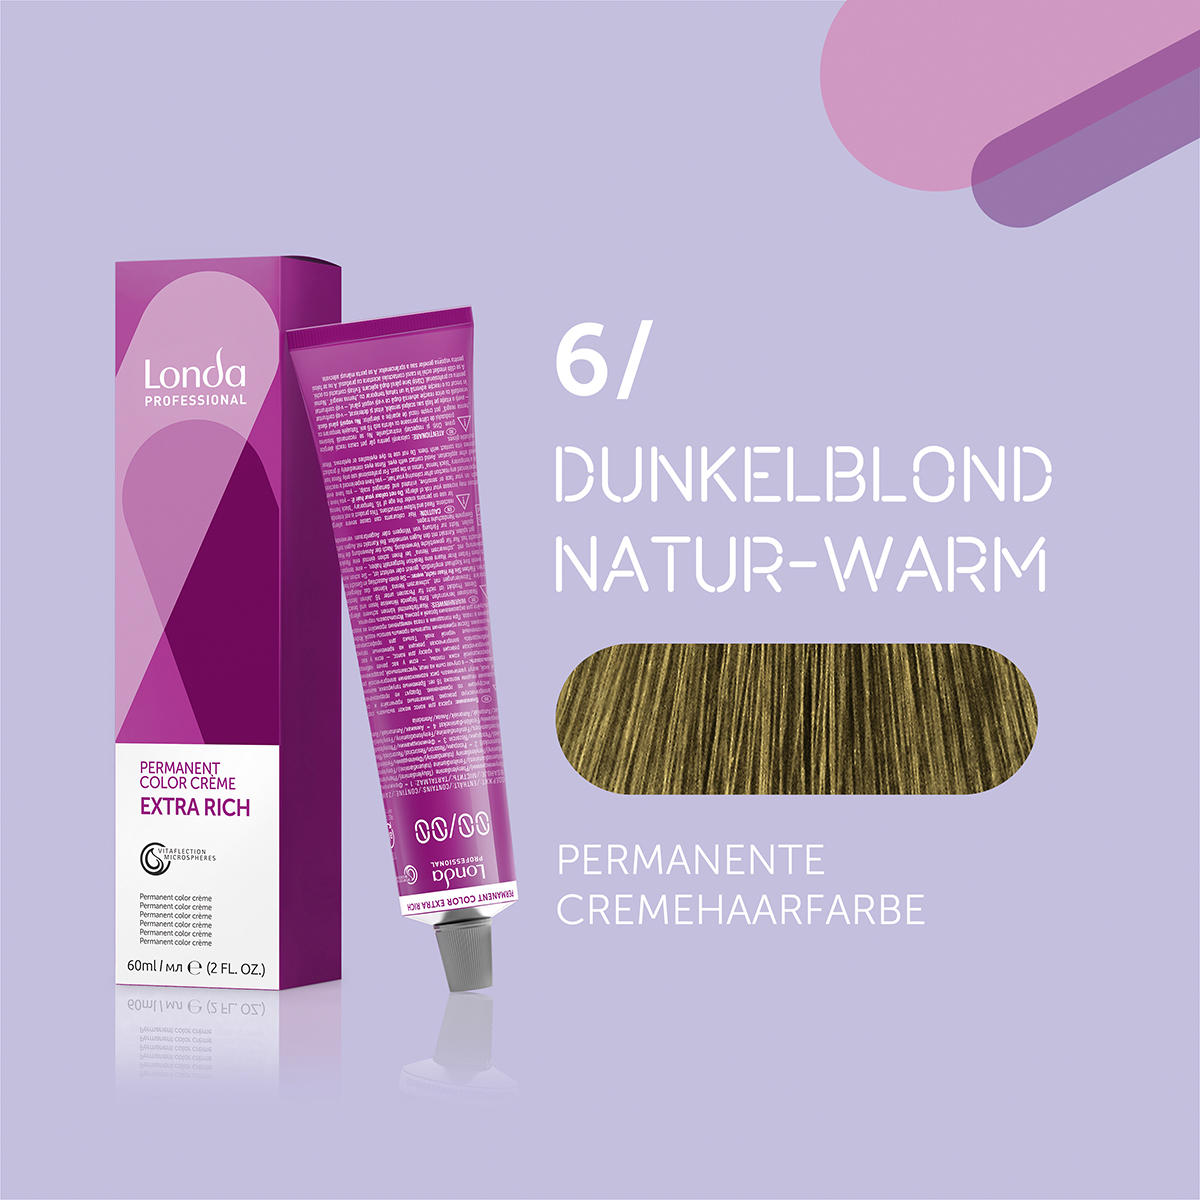 Londa Permanente Cremehaarfarbe Extra Rich 6/ Dunkelblond Natur Warm, Tube 60 ml